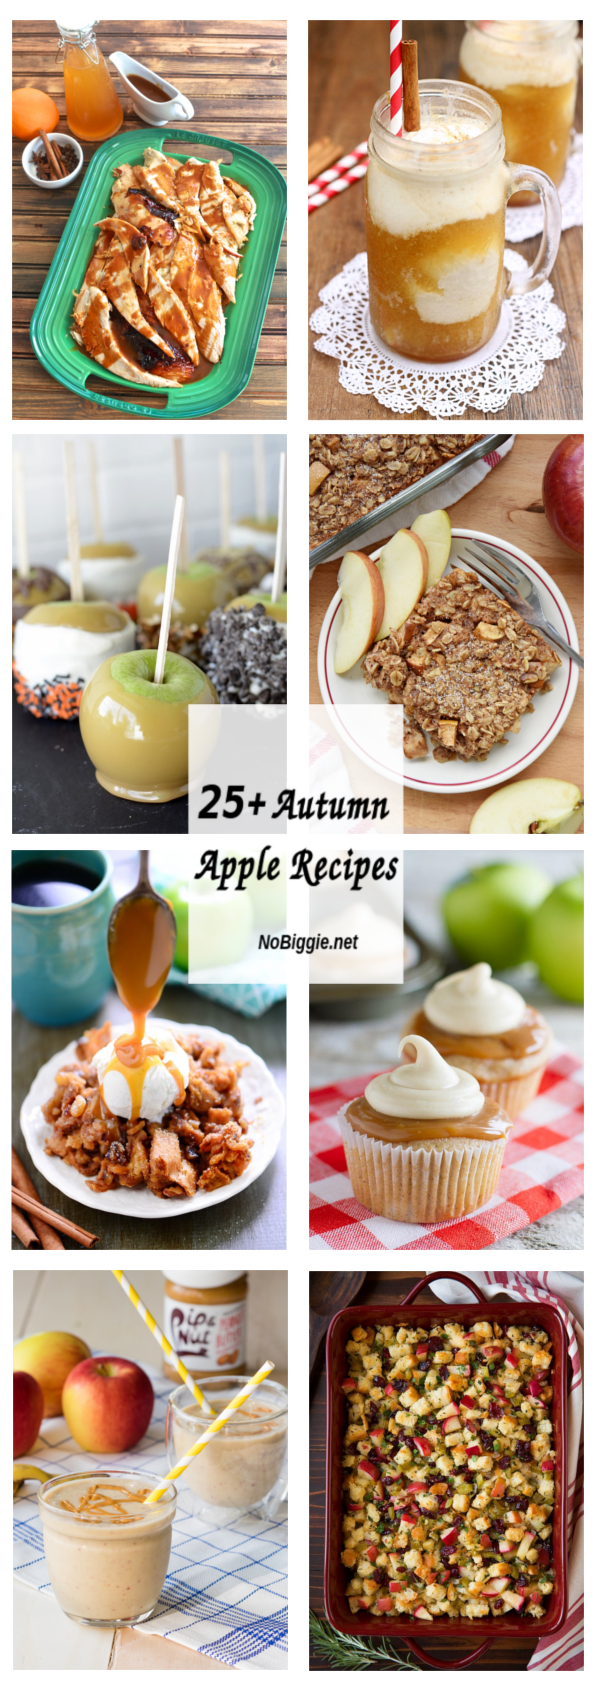 25+ Autumn Apple Recipes | NoBiggie.net